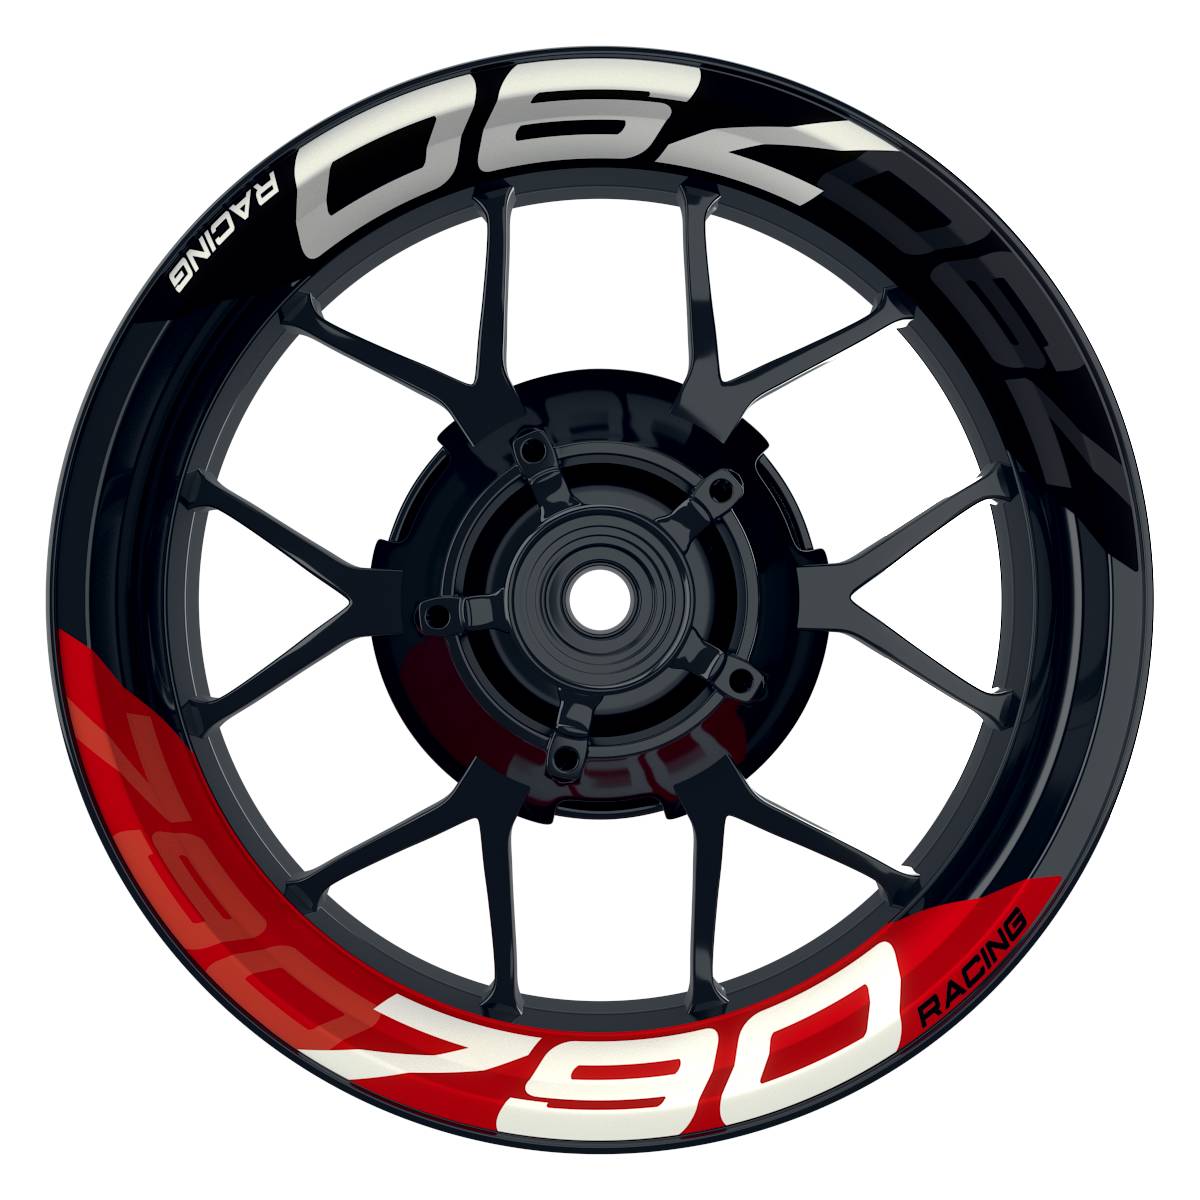 Wheelsticker Felgenaufkleber KTM Racing 790 halb halb V2 schwarz rot Frontansicht